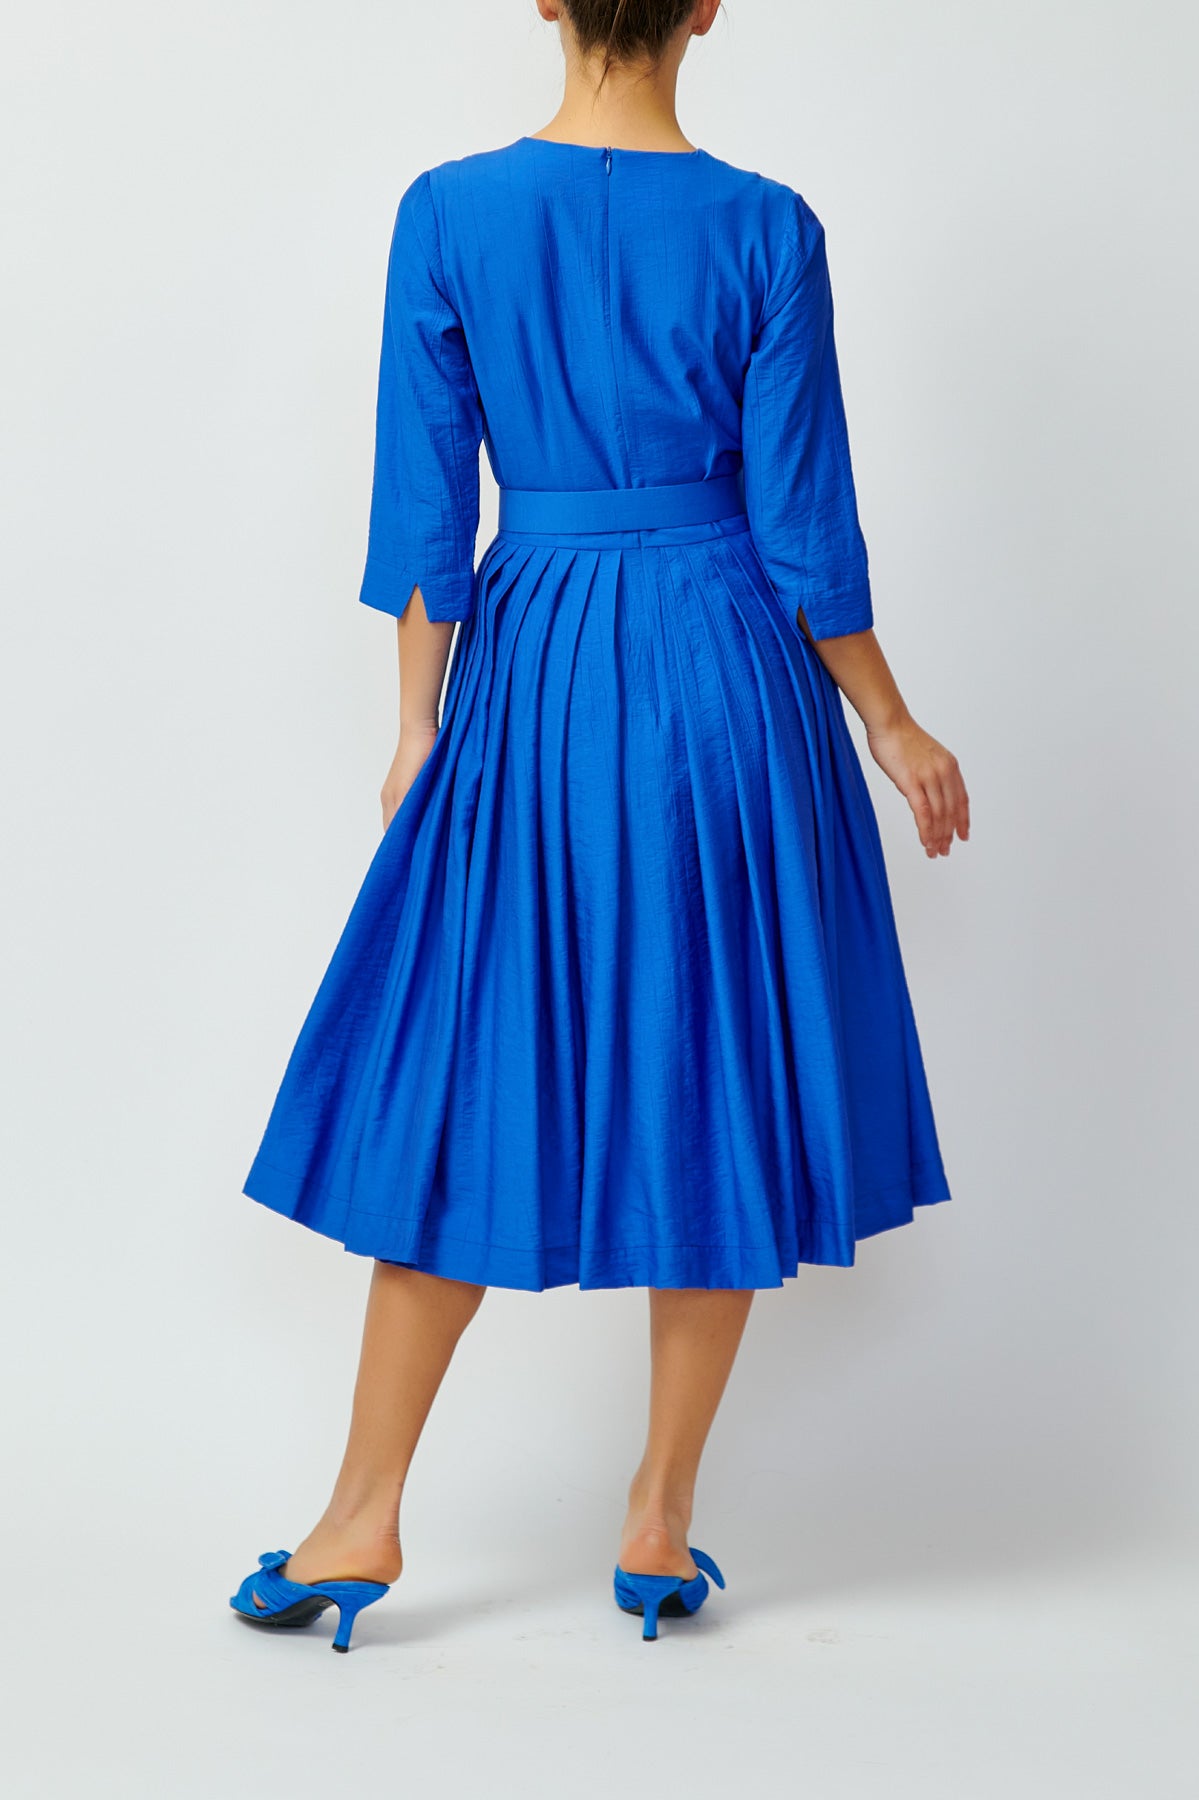 Blue dress